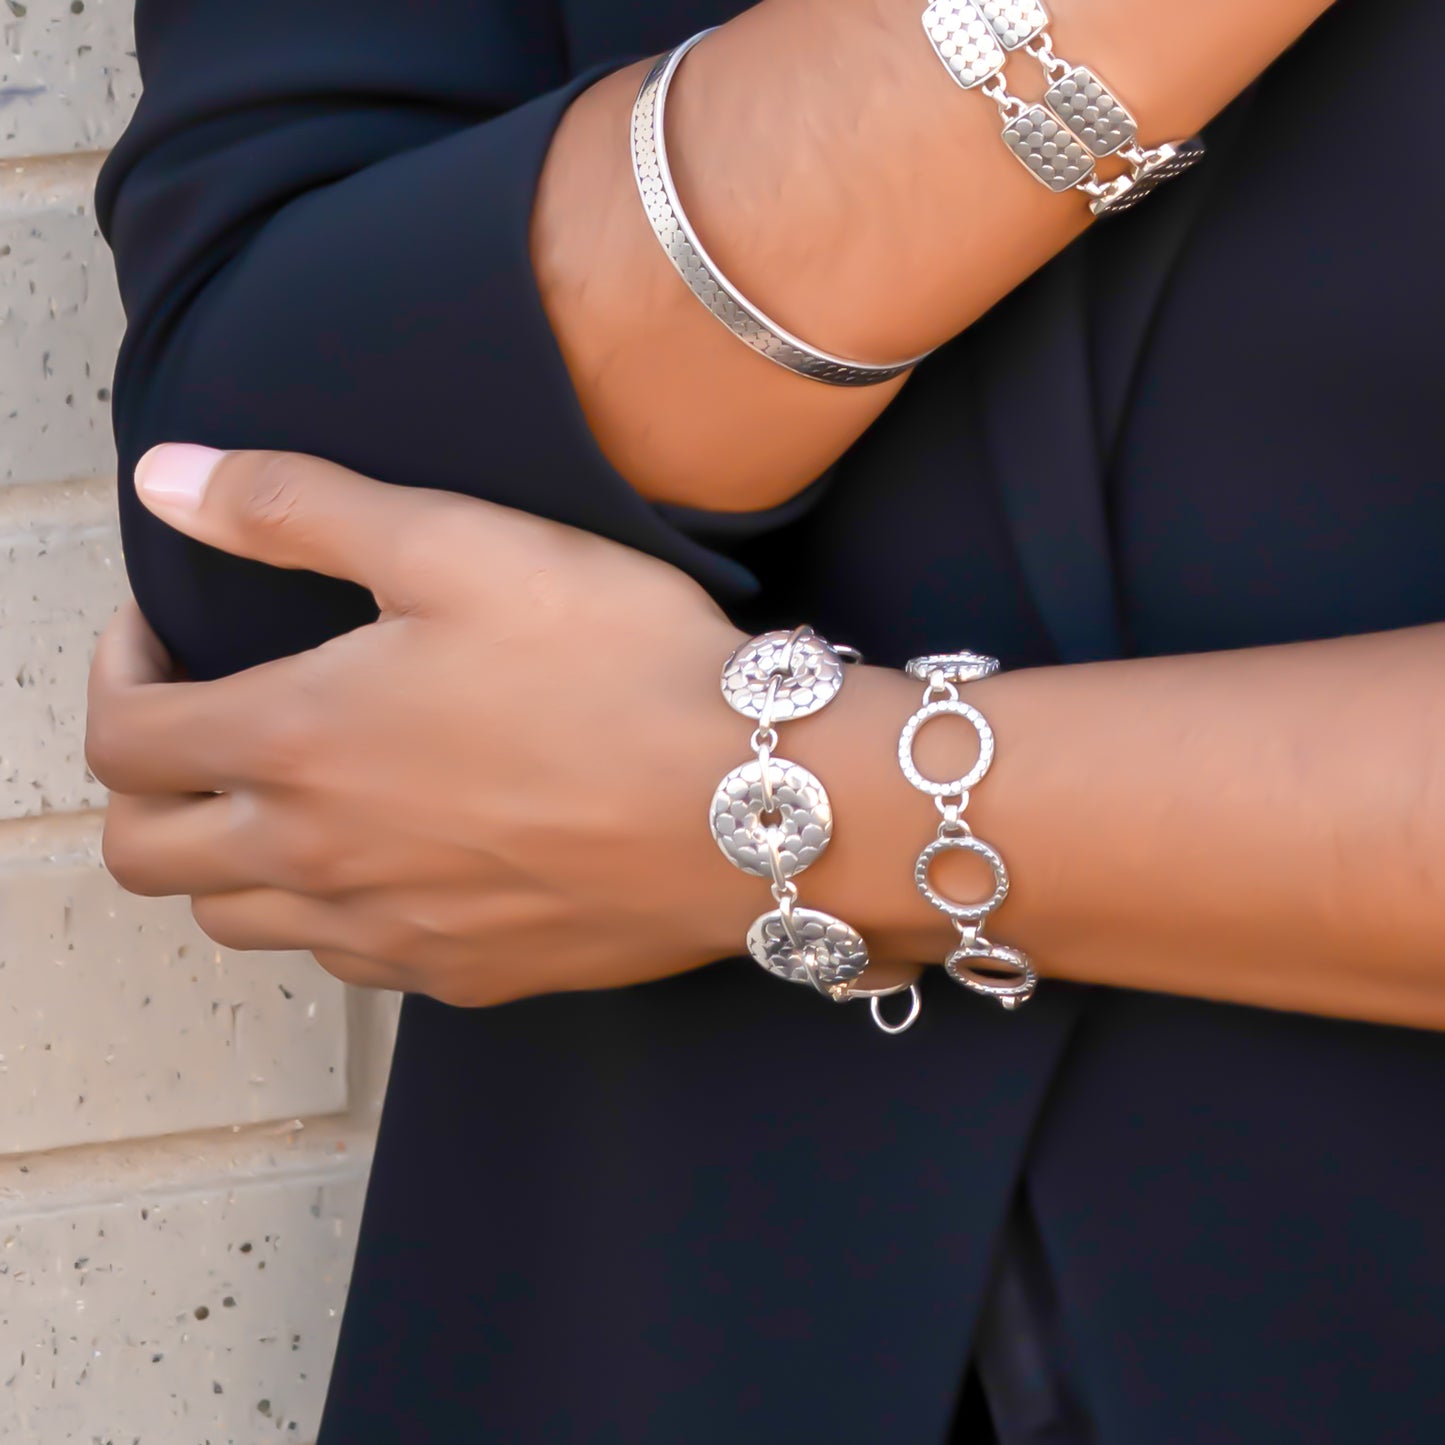 Woman wearing 5 different silver bracelets.